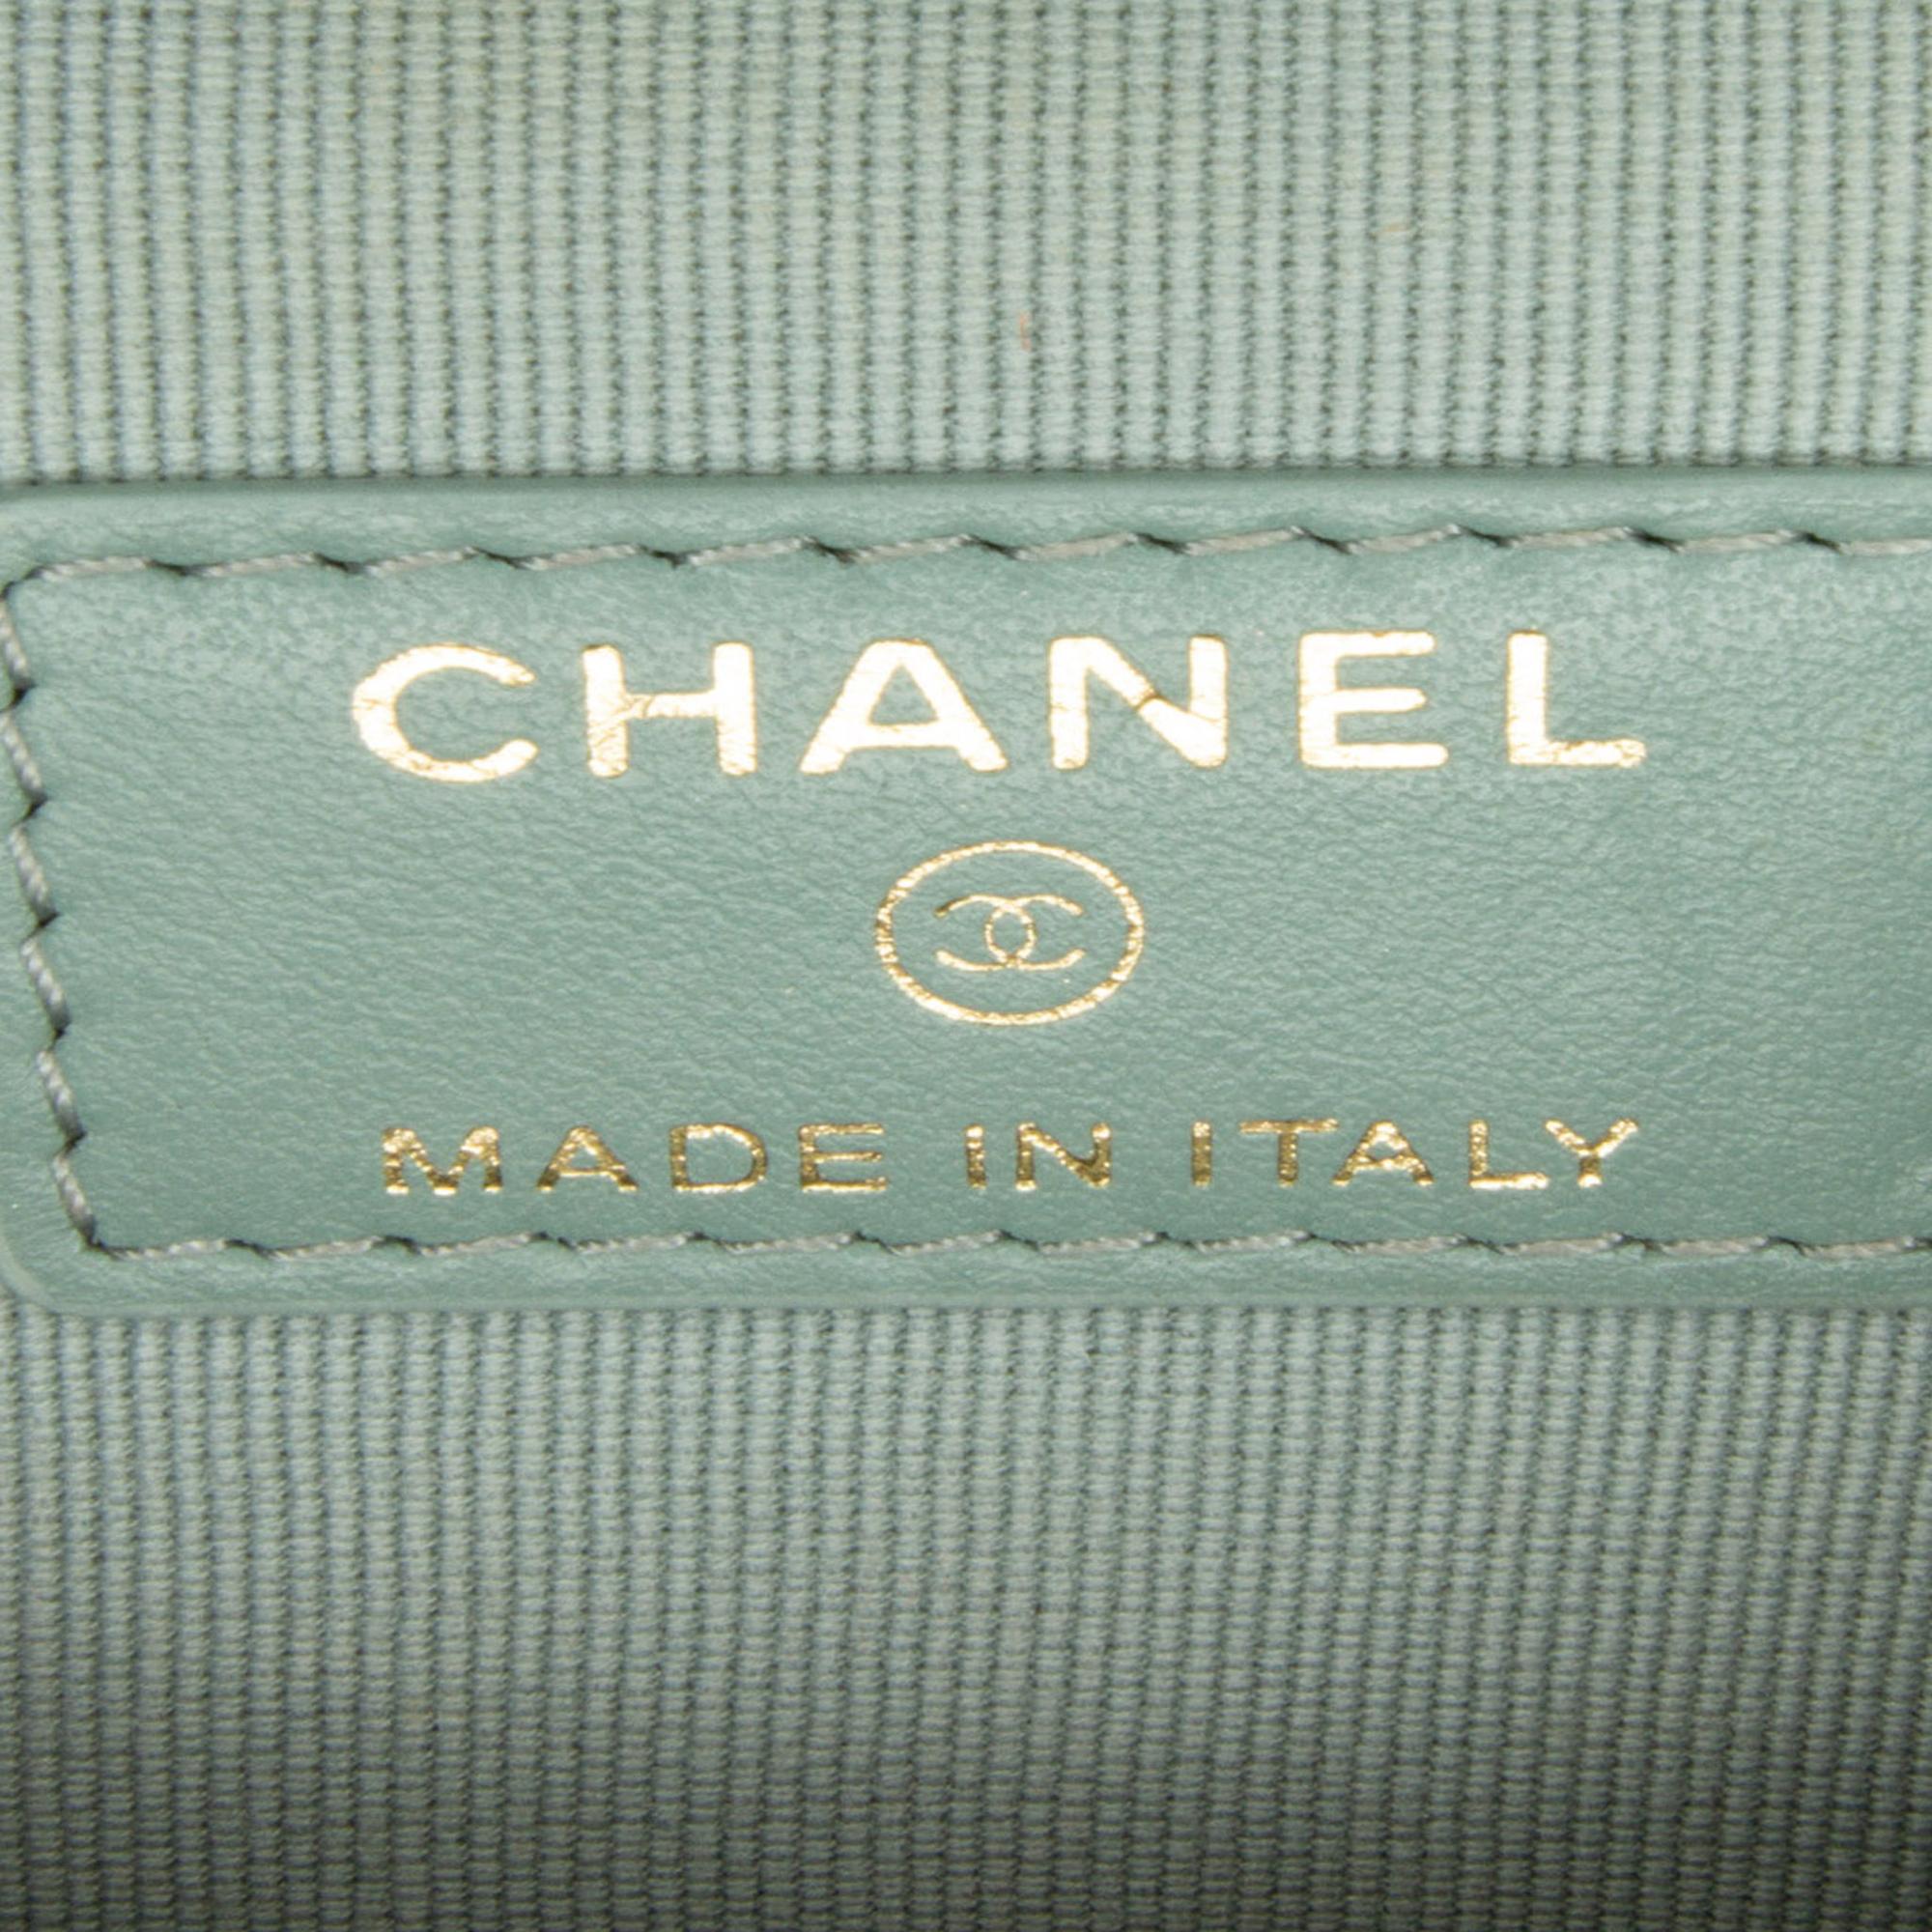 Chanel Green CC Caviar Vanity Bag